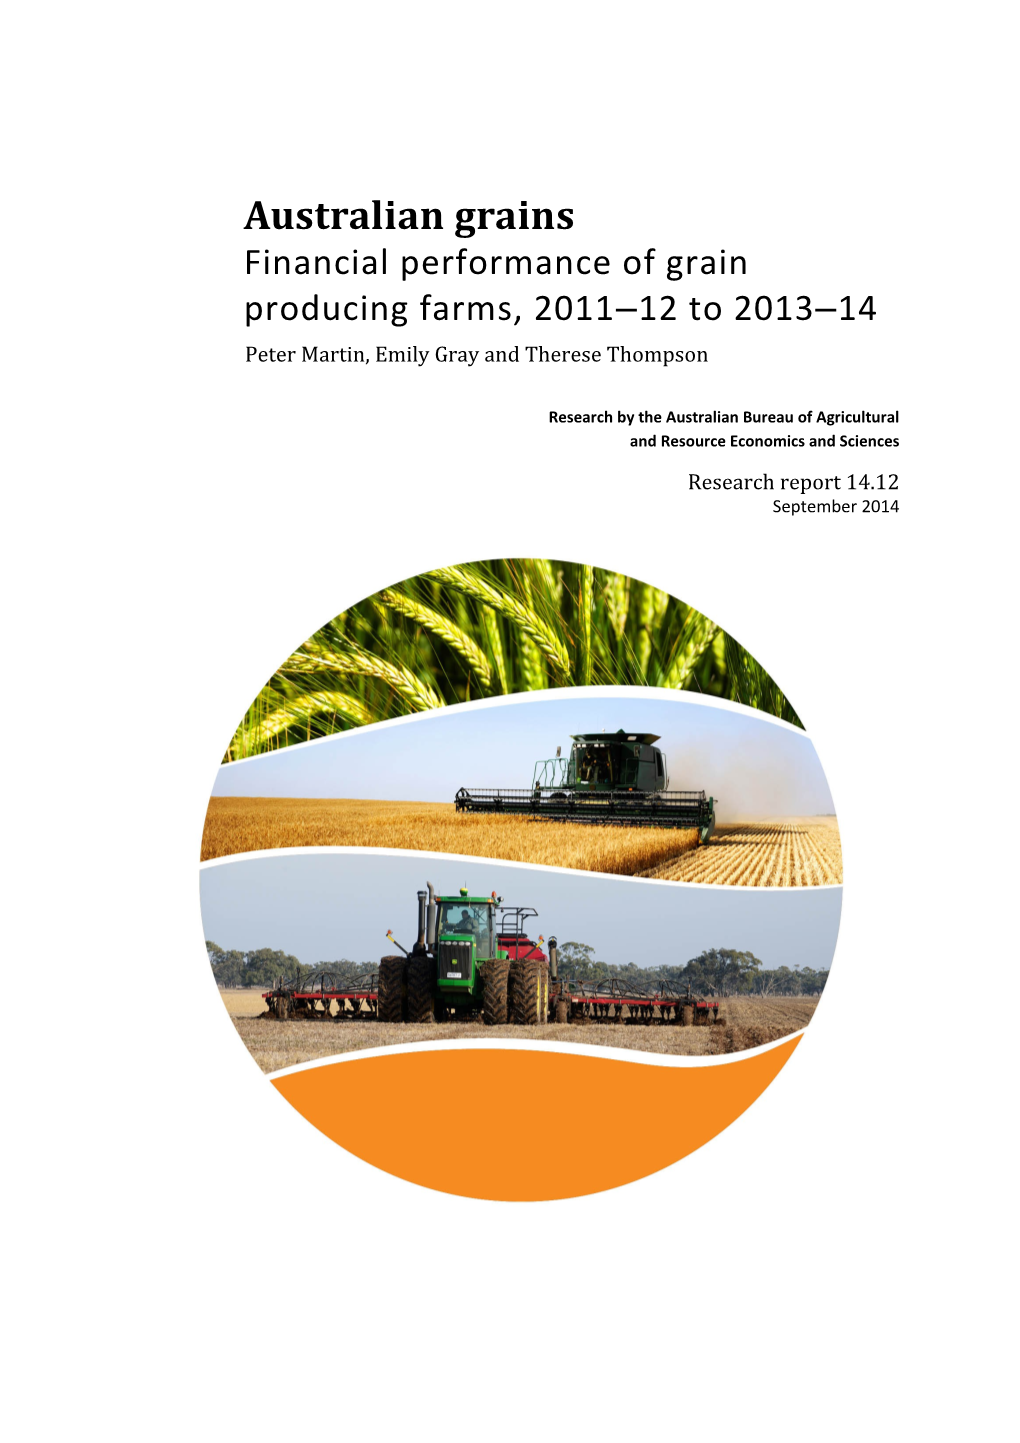 Australian Grains: Financial Performance of Grain Producing Farms, 2011 12 to 2013 14